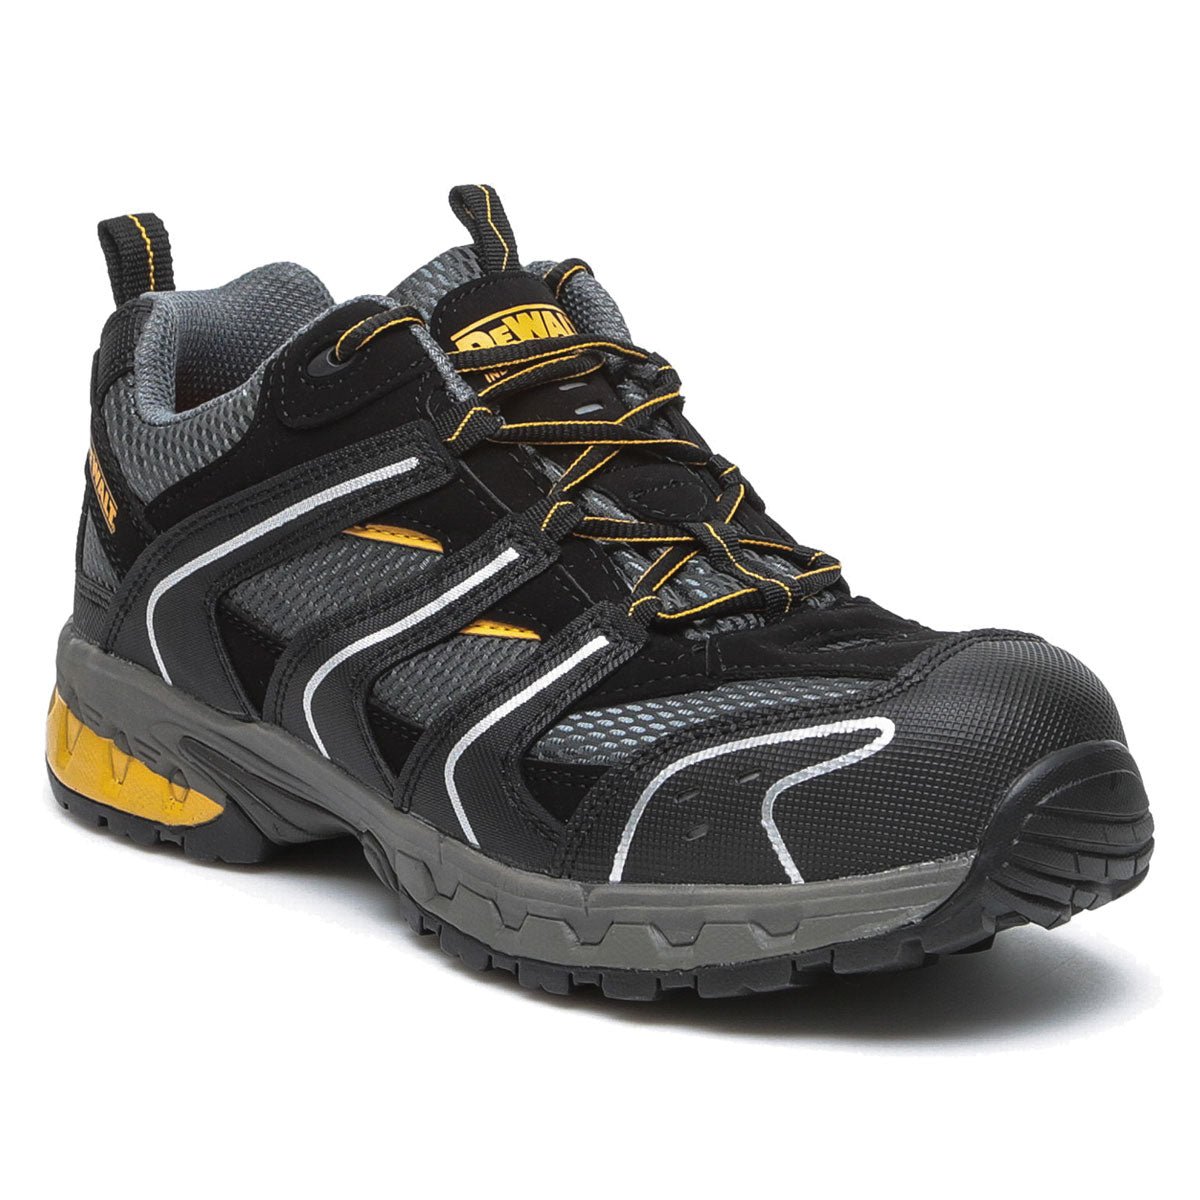 DeWalt Cutter Steel Toe Cap Safety Trainers - Shoe Store Direct